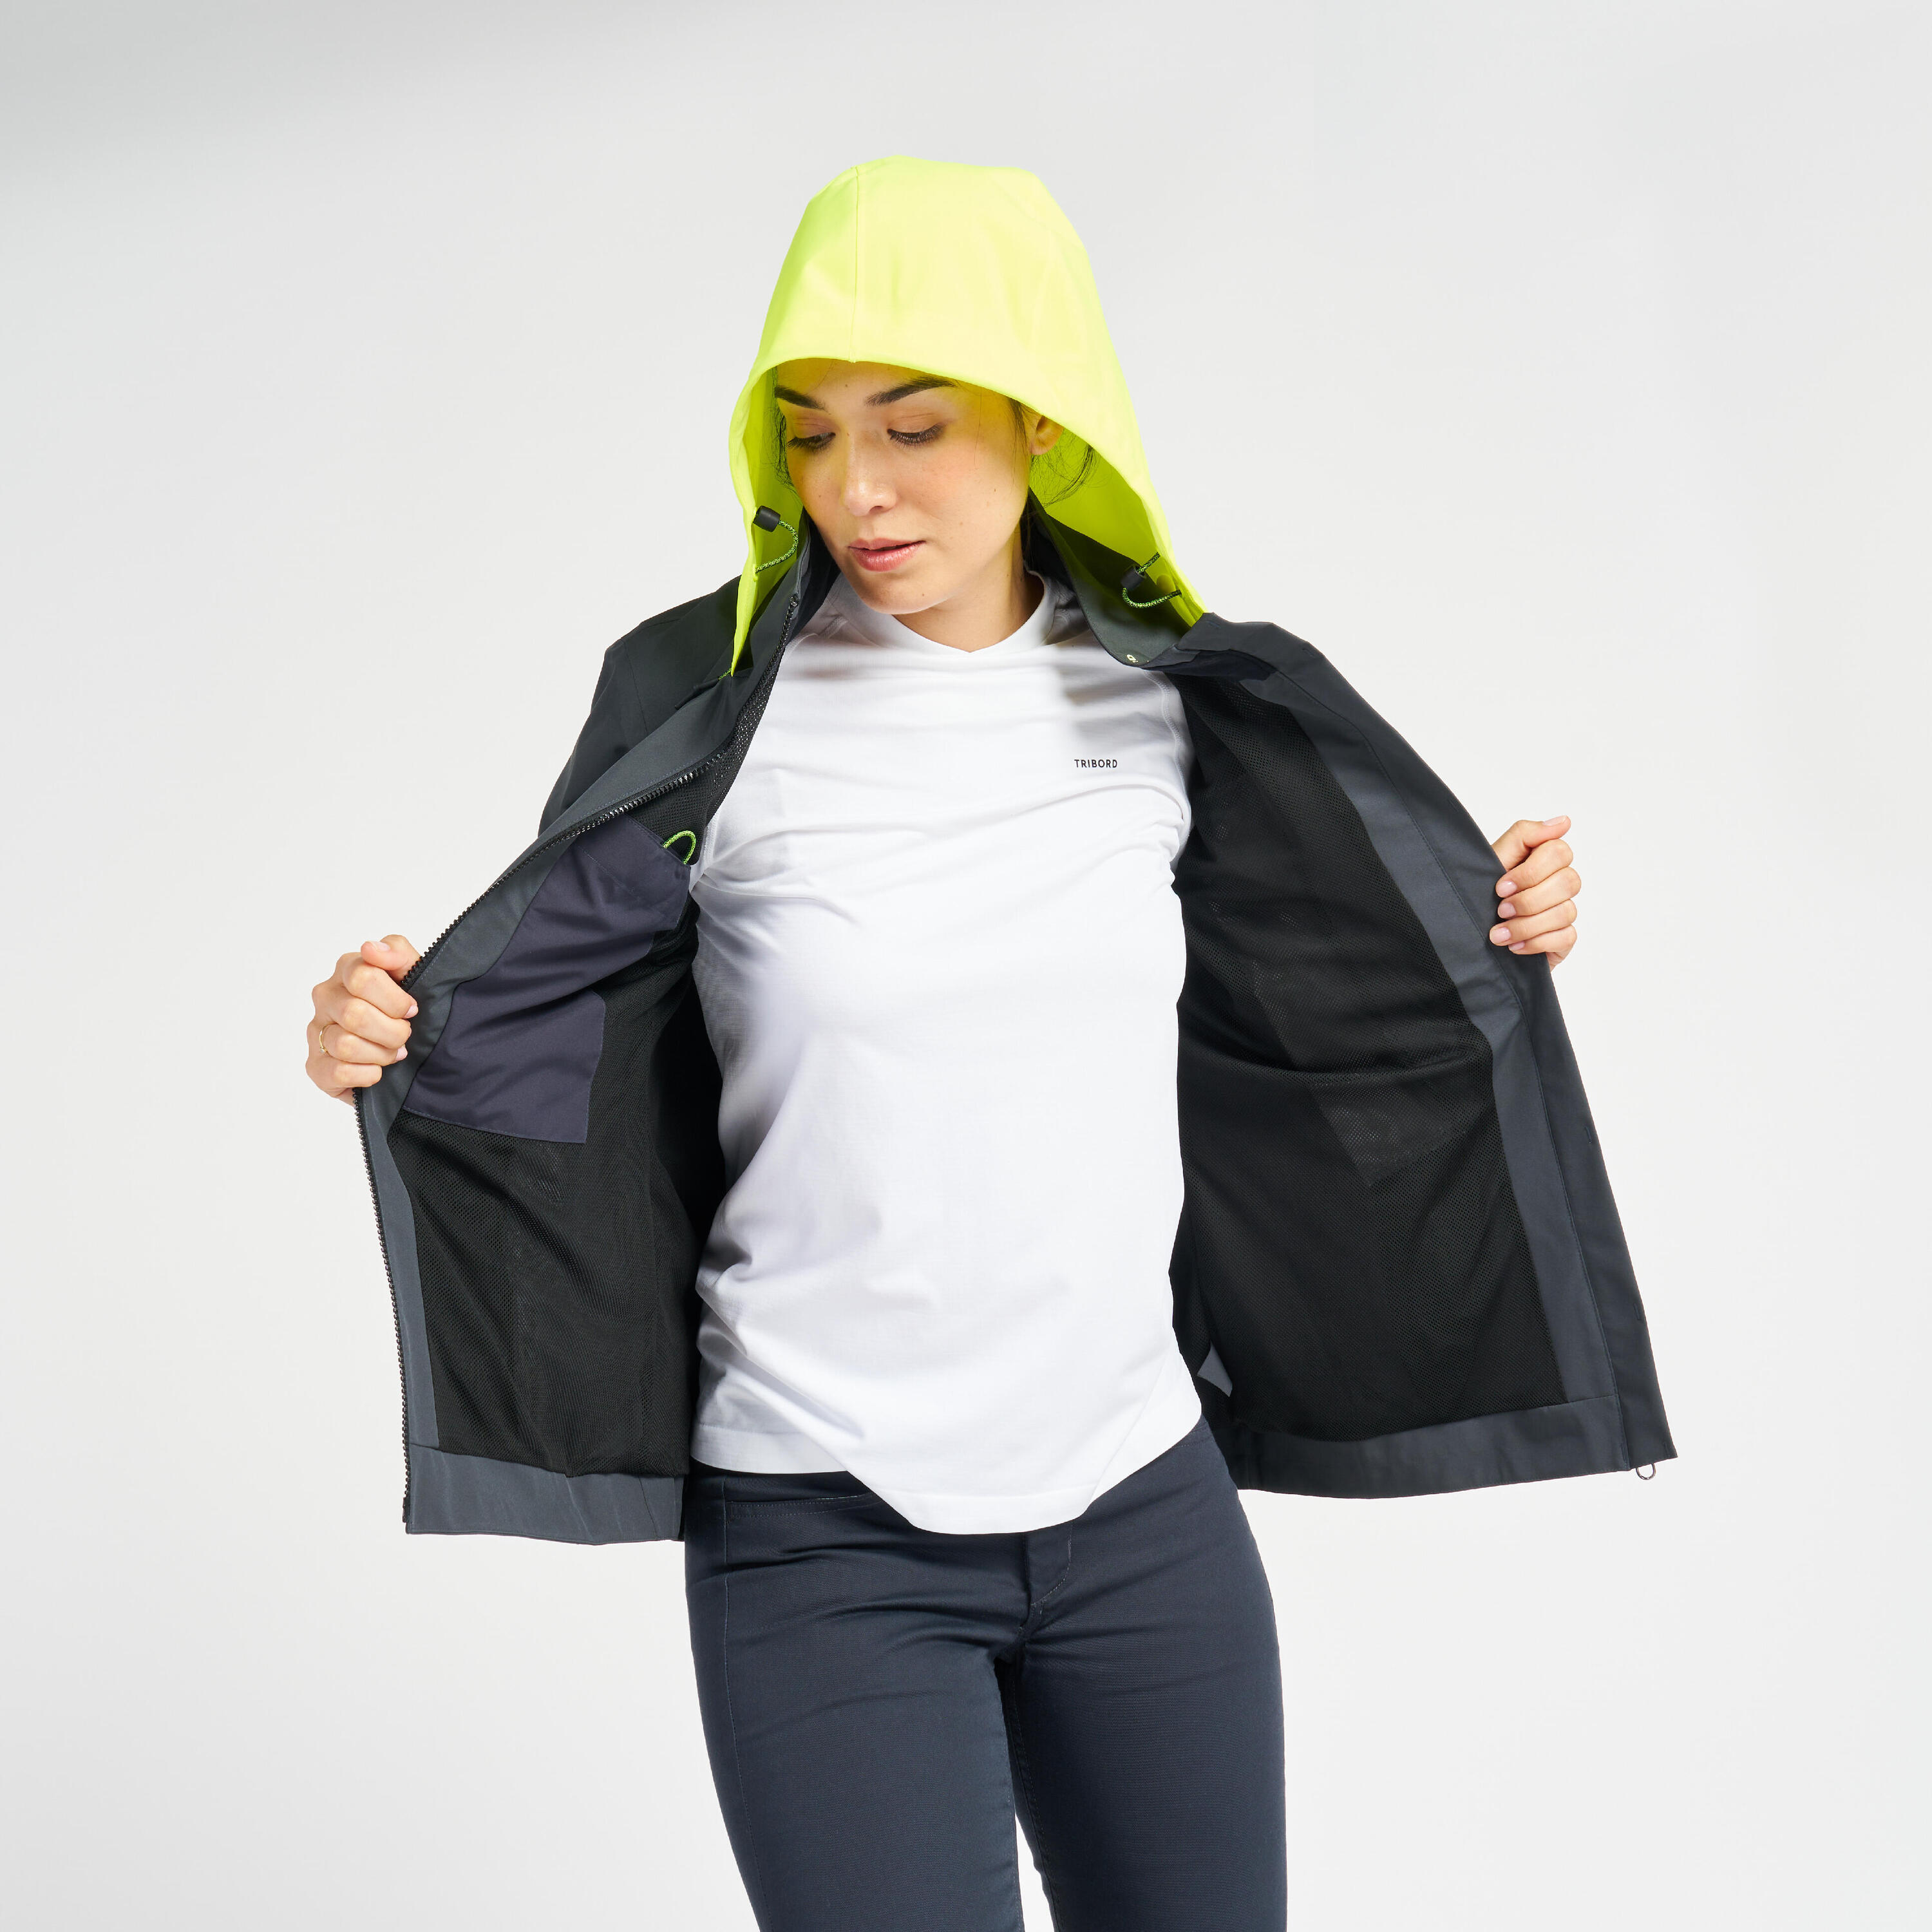 Women's sailing waterproof windproof jacket SAILING 300 - Dark grey Yellow hood 13/13